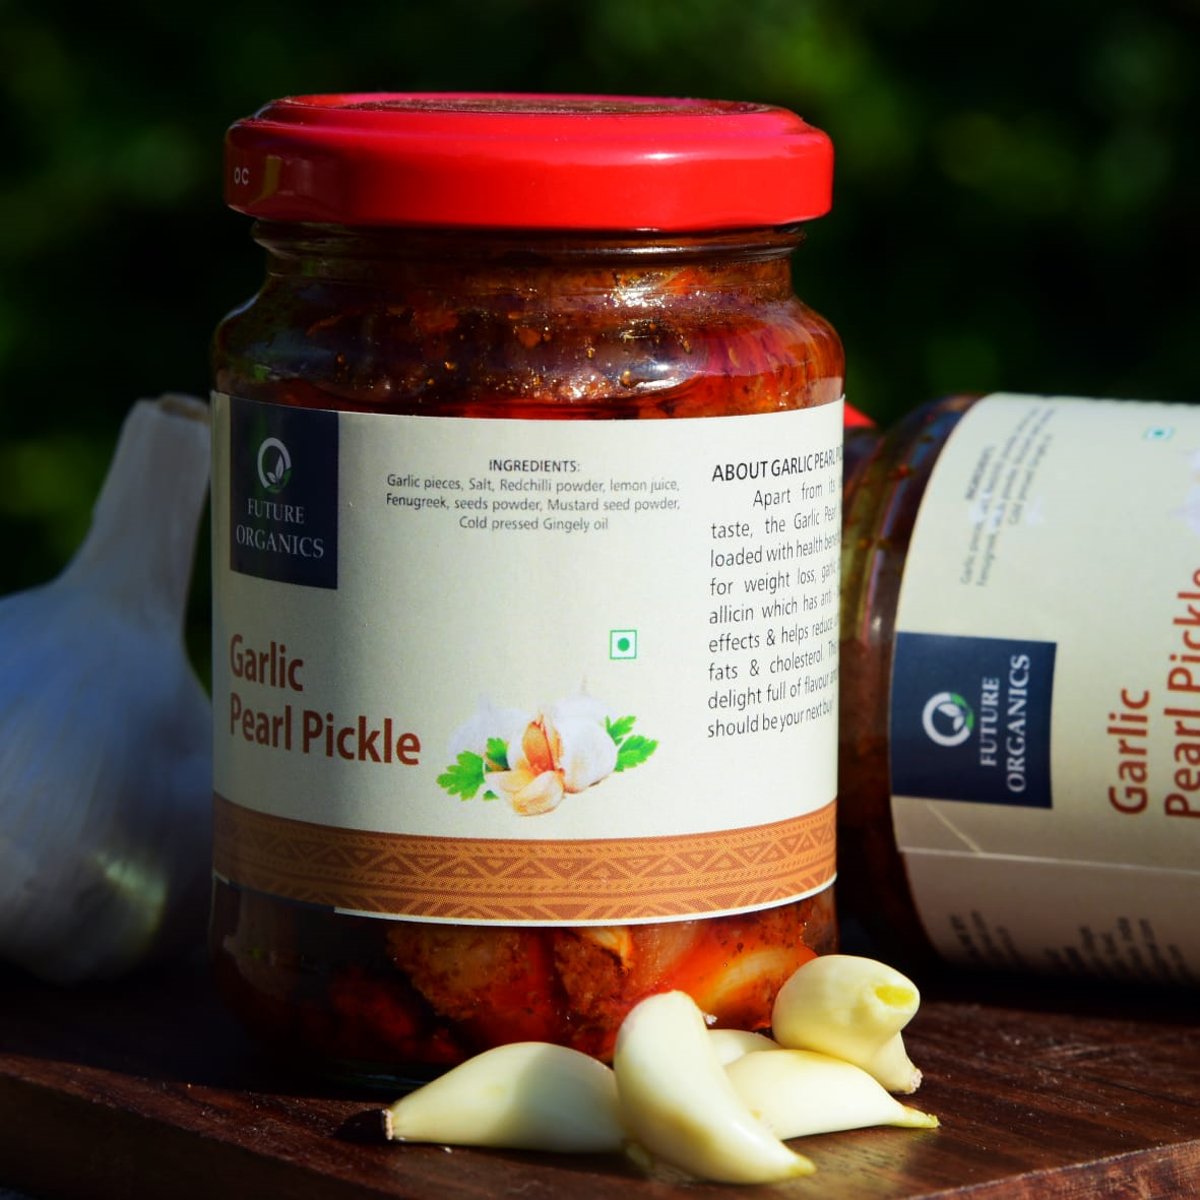 Garlic Pearl Pickle(set of 2) - Future Organics - BeKarmic